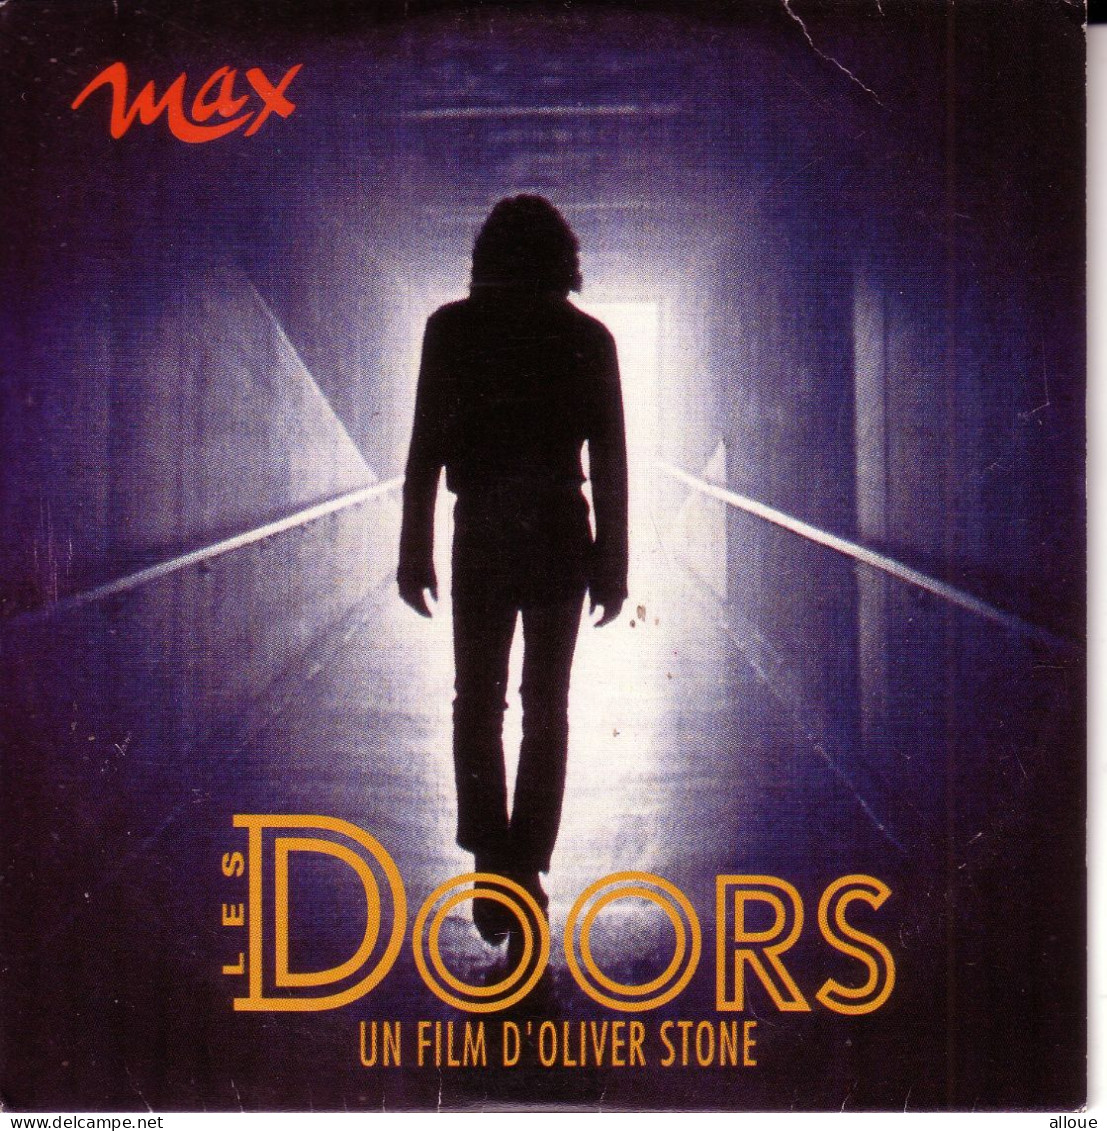 THE DOORS - CD EXCLUSIVITE MAX - POCHETTE CARTON 5 TRACKS ET EXTRAITS D'INTERVIEW DE RAY MANZAREK - Altri - Inglese